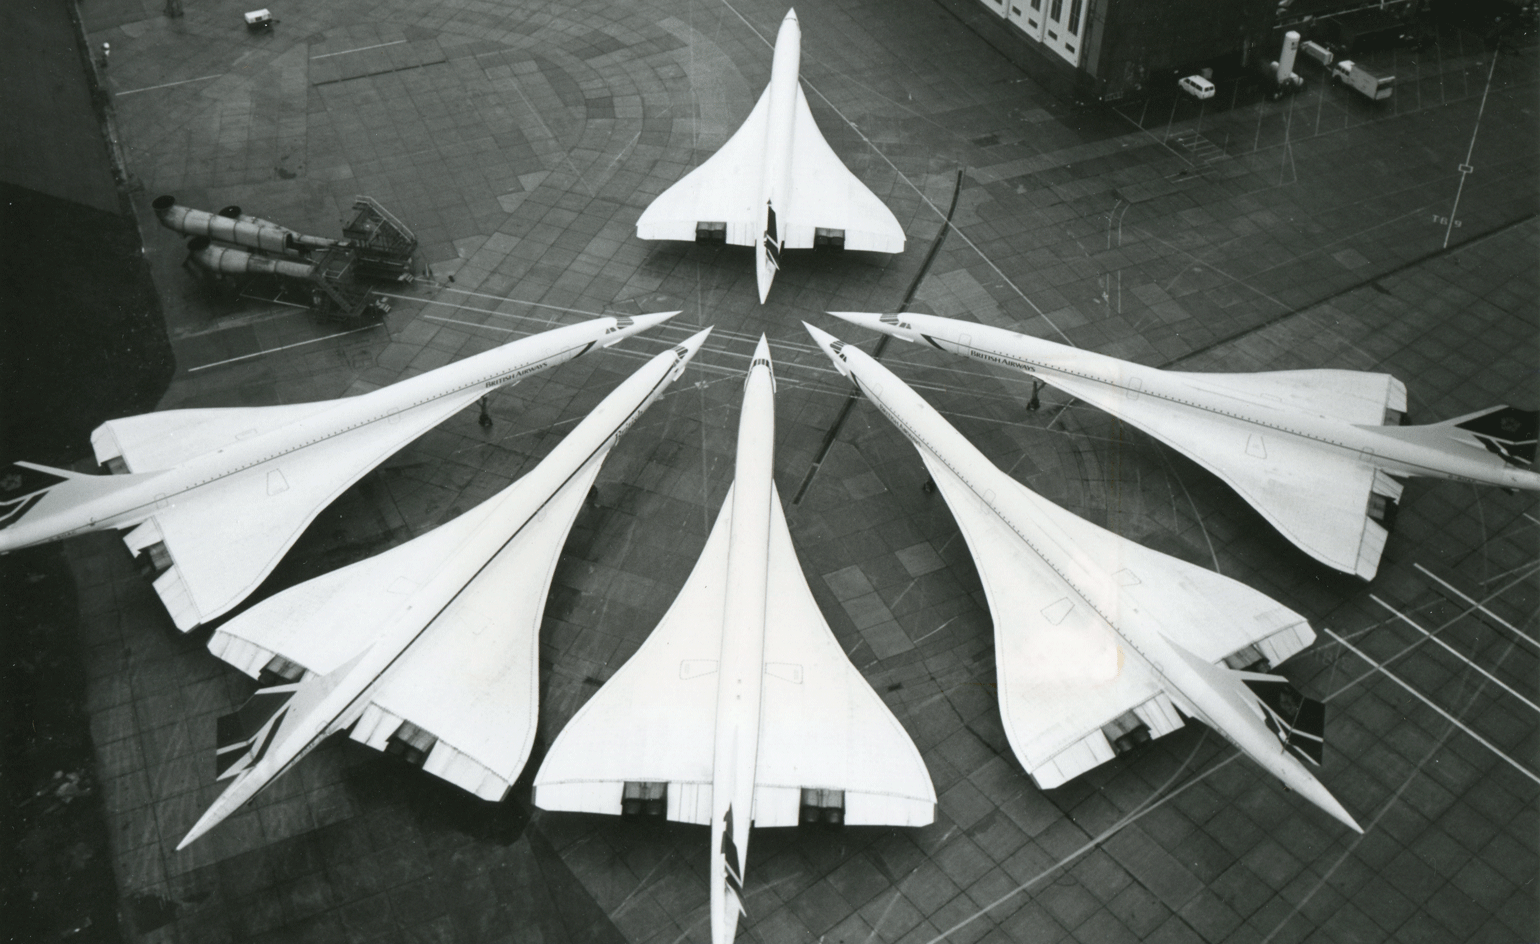 Photograph of Concorde fleet